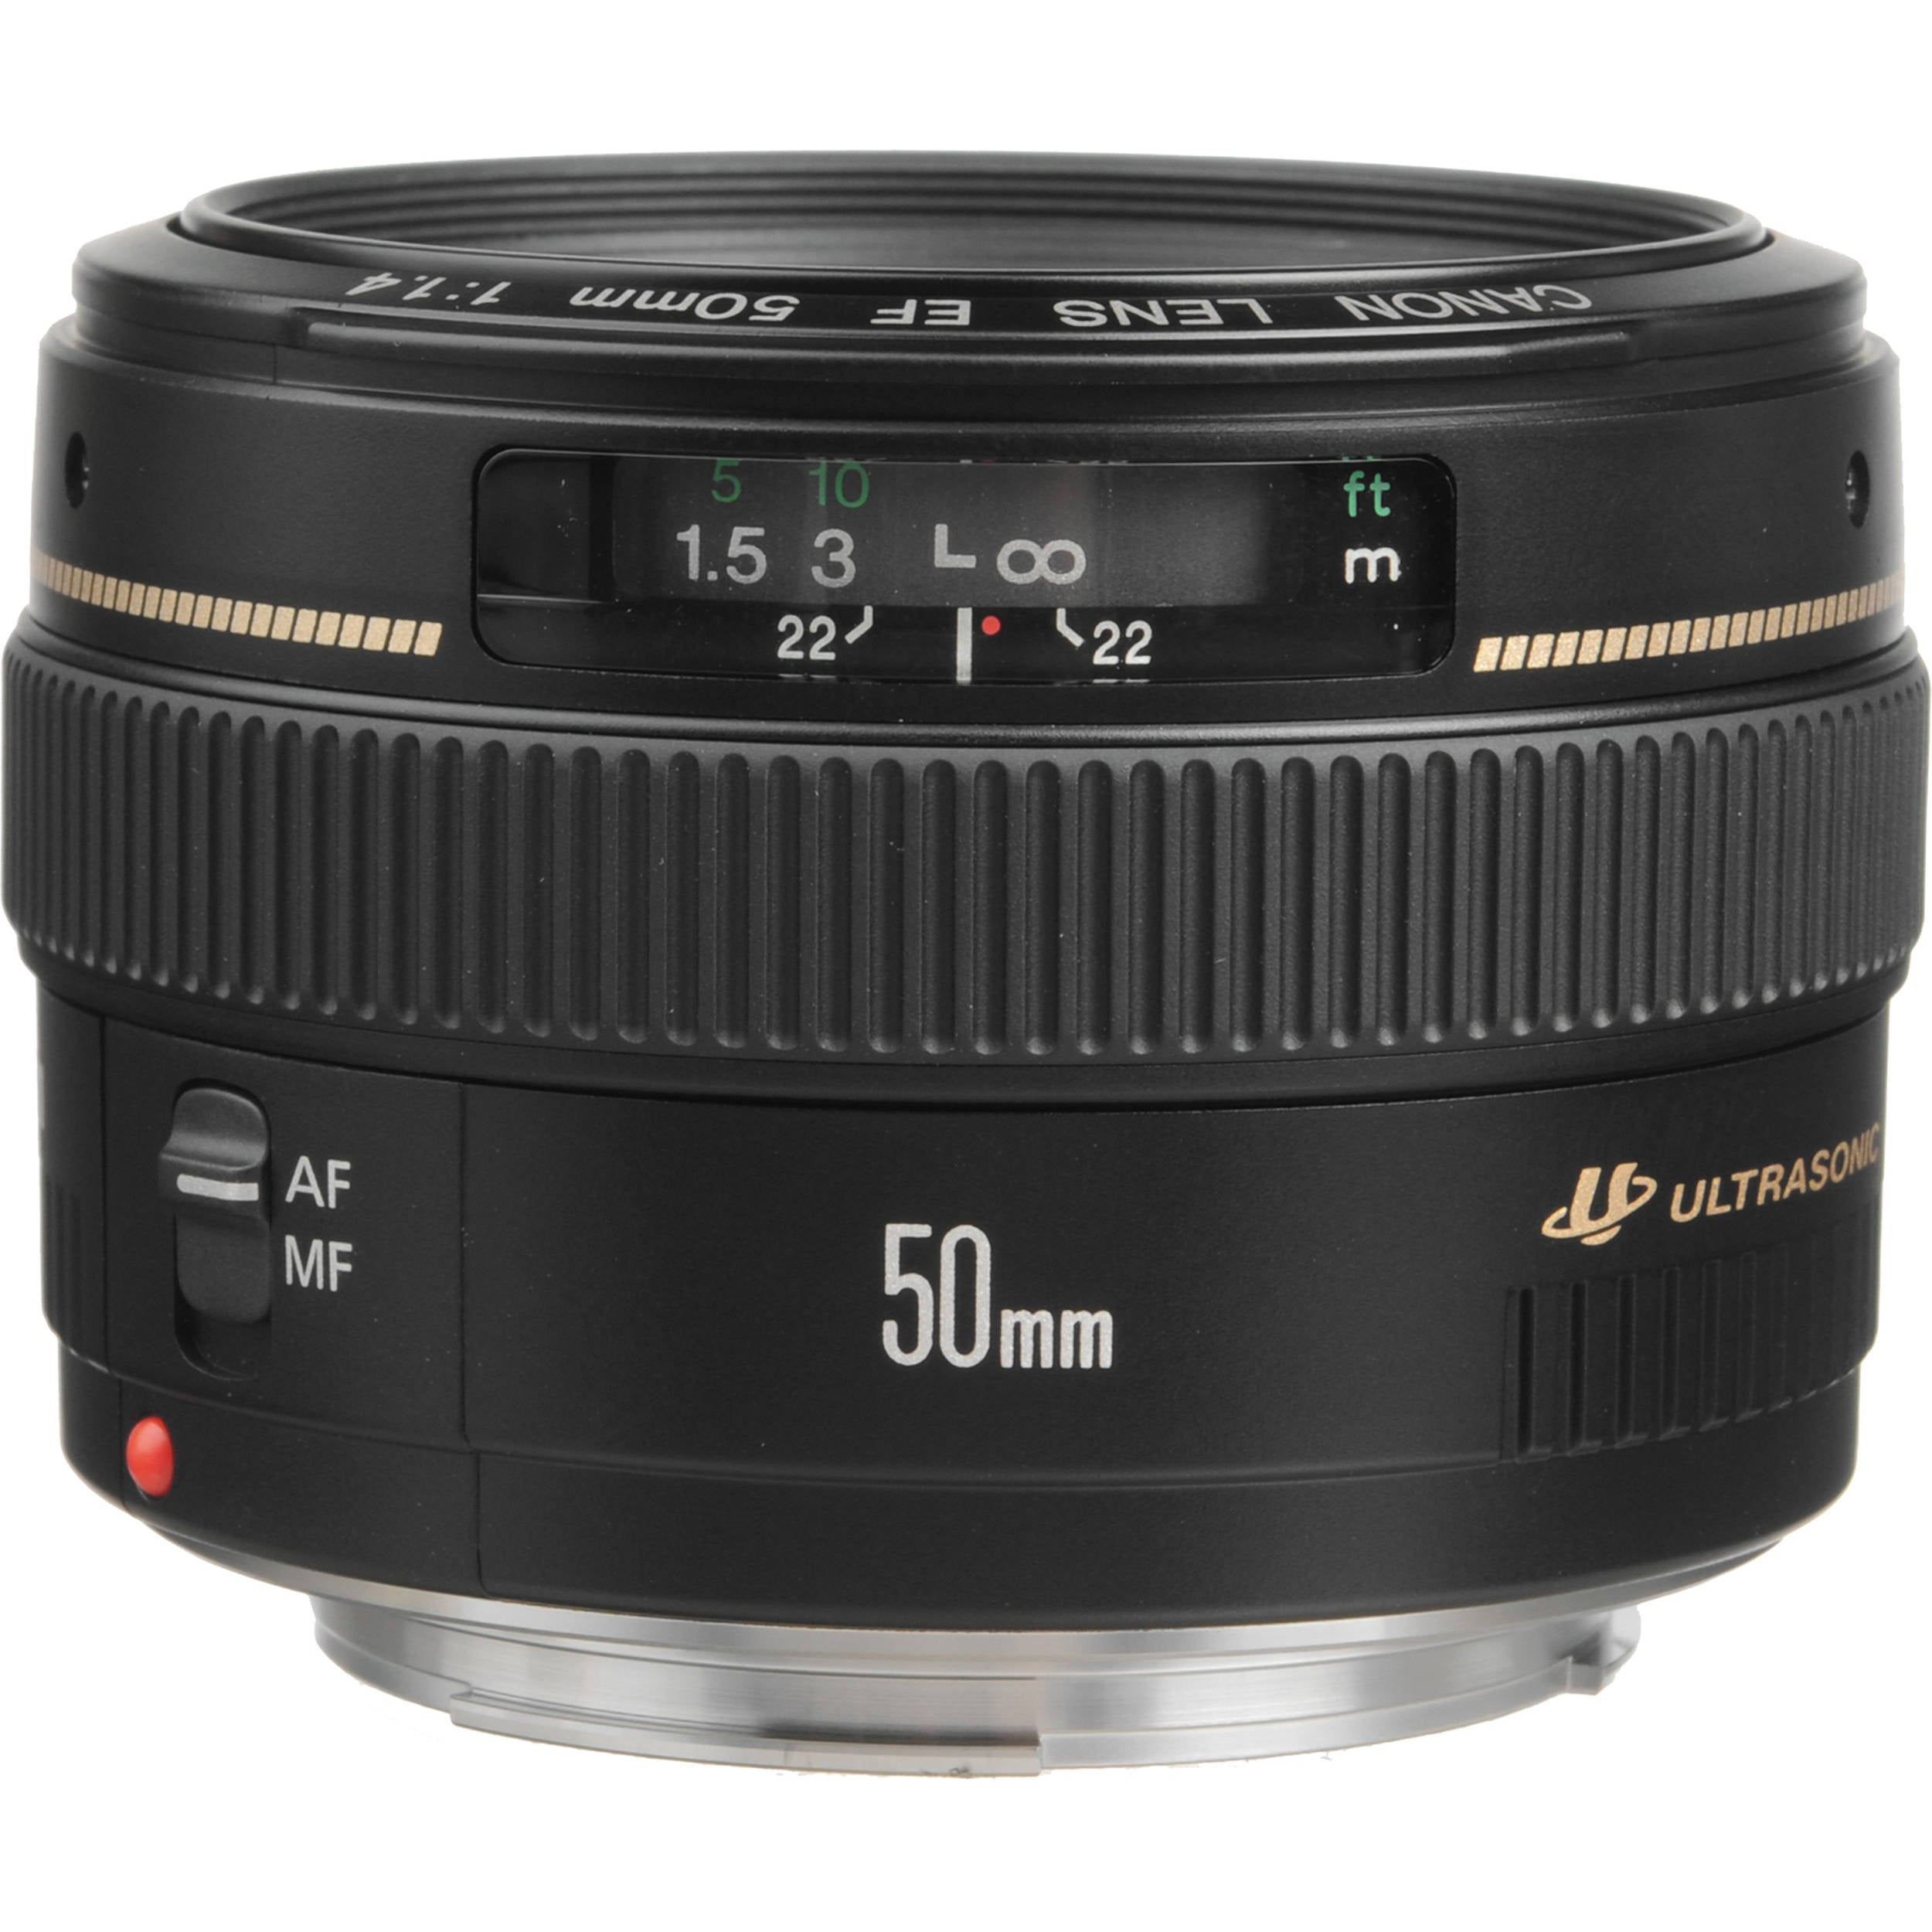 Canon EF 35mm f/1.4L II USM Lens (Intl Model) With Lens Case, Lens Filter Kit and Cleaning Kit